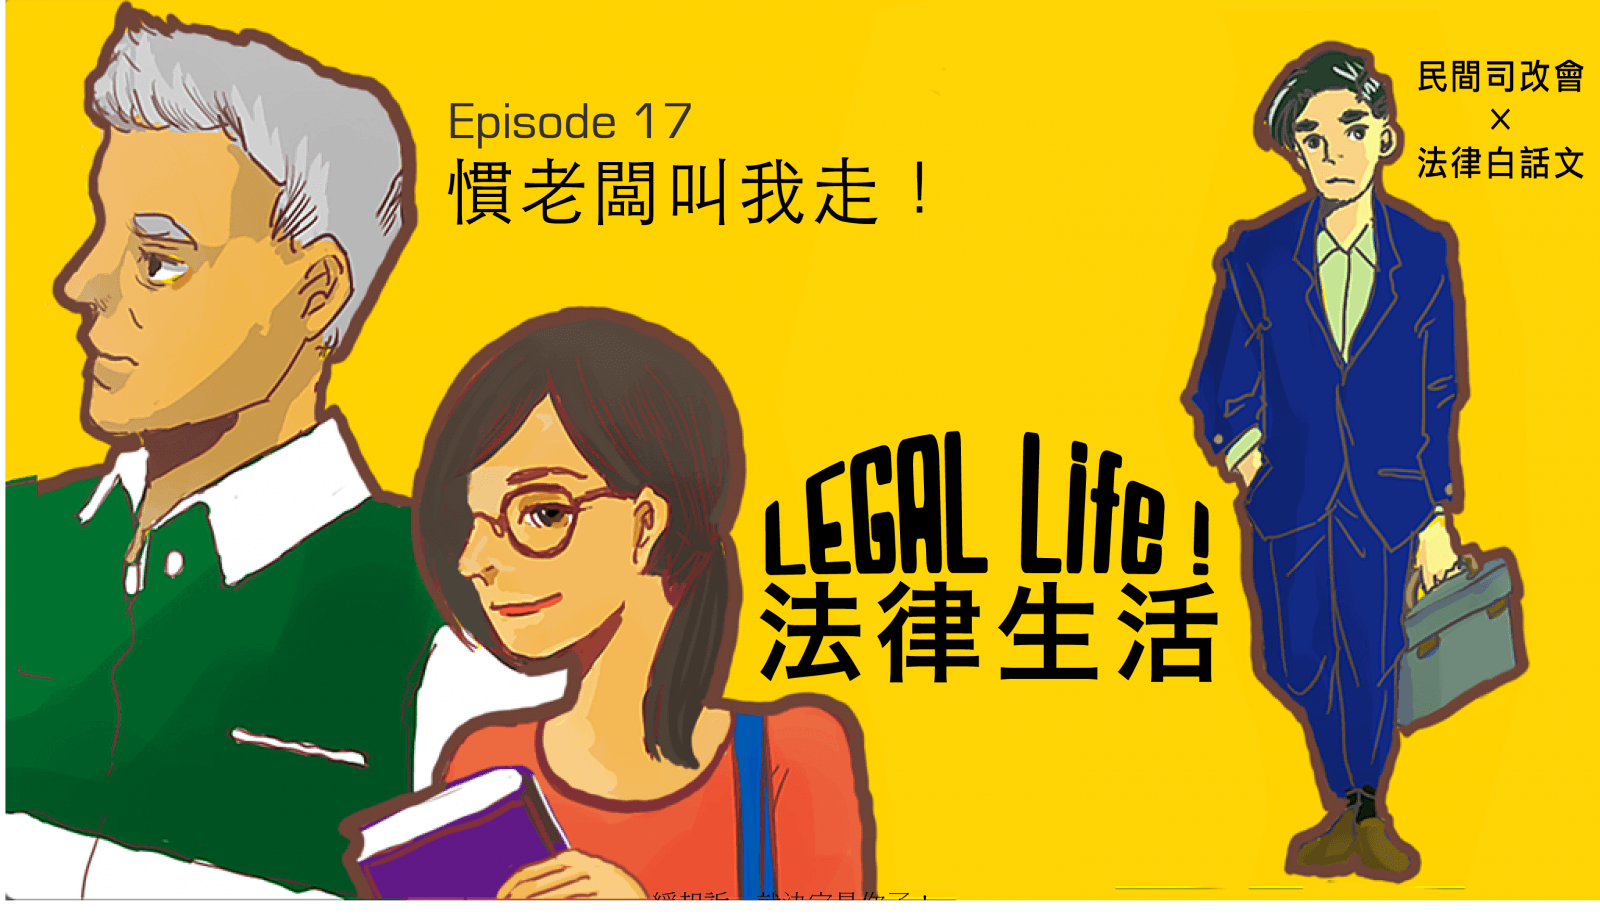 2016/09/legal-life17.png